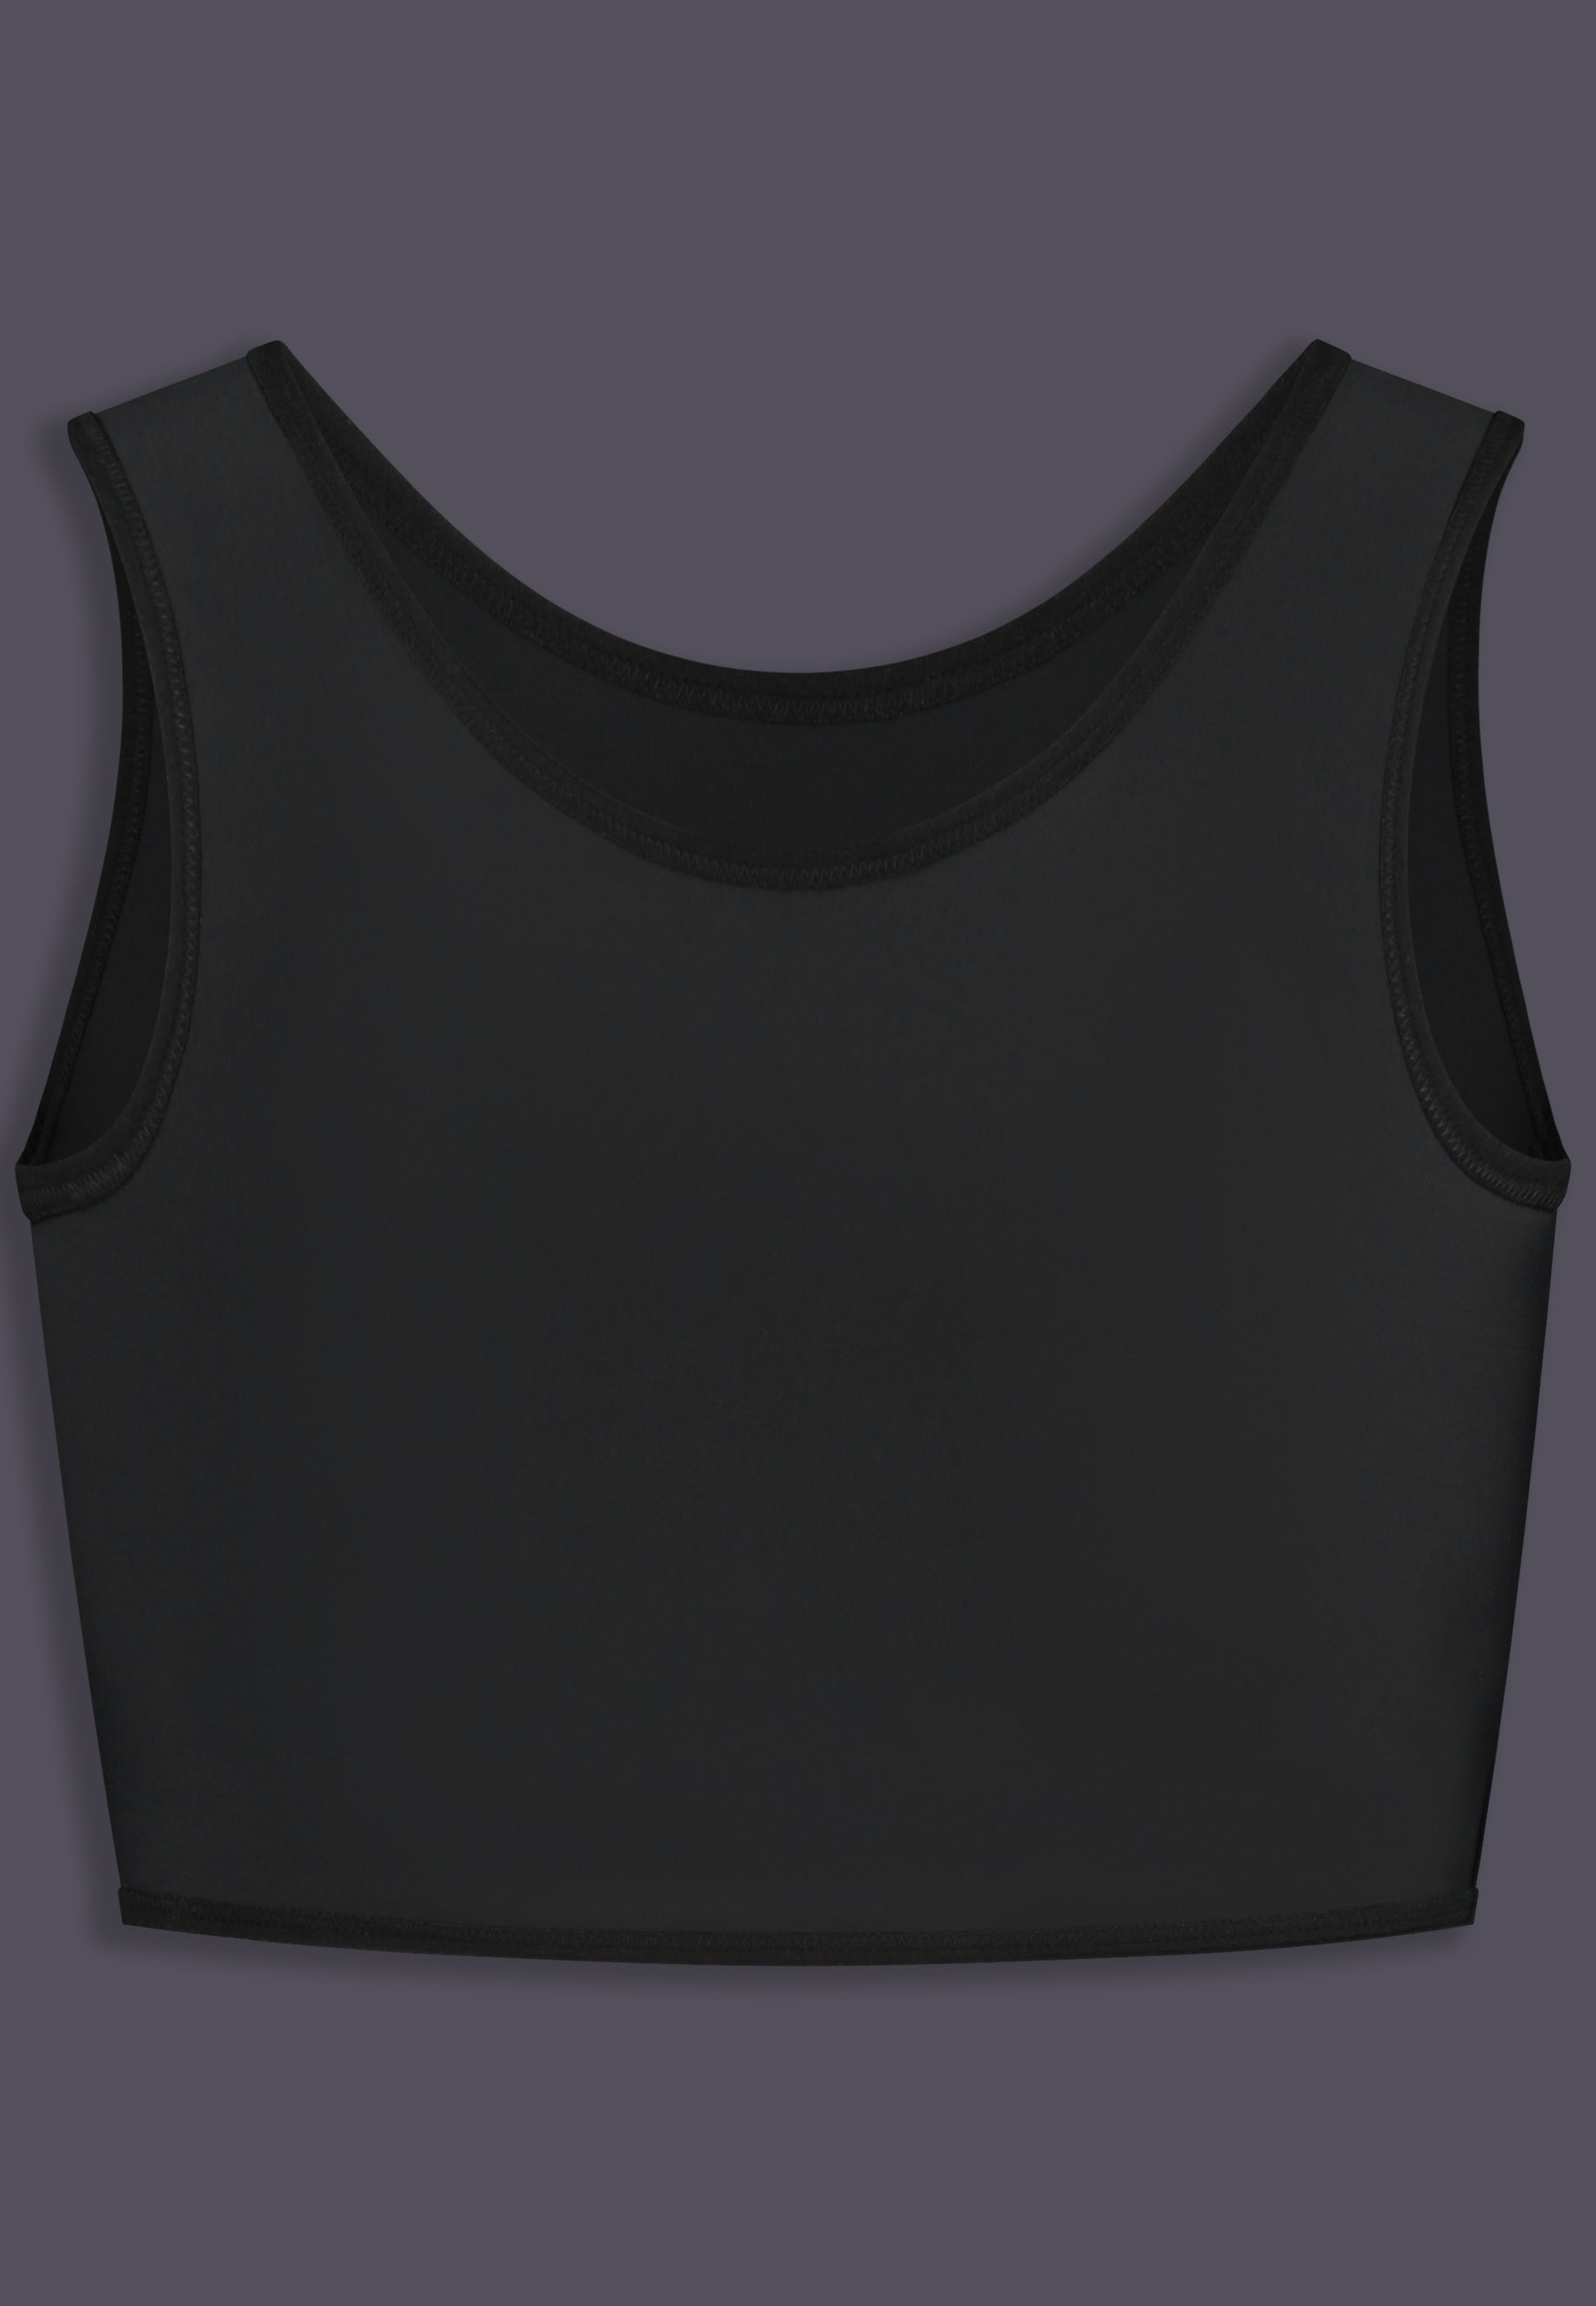 Long, black, sports chest binder, flattening breasts